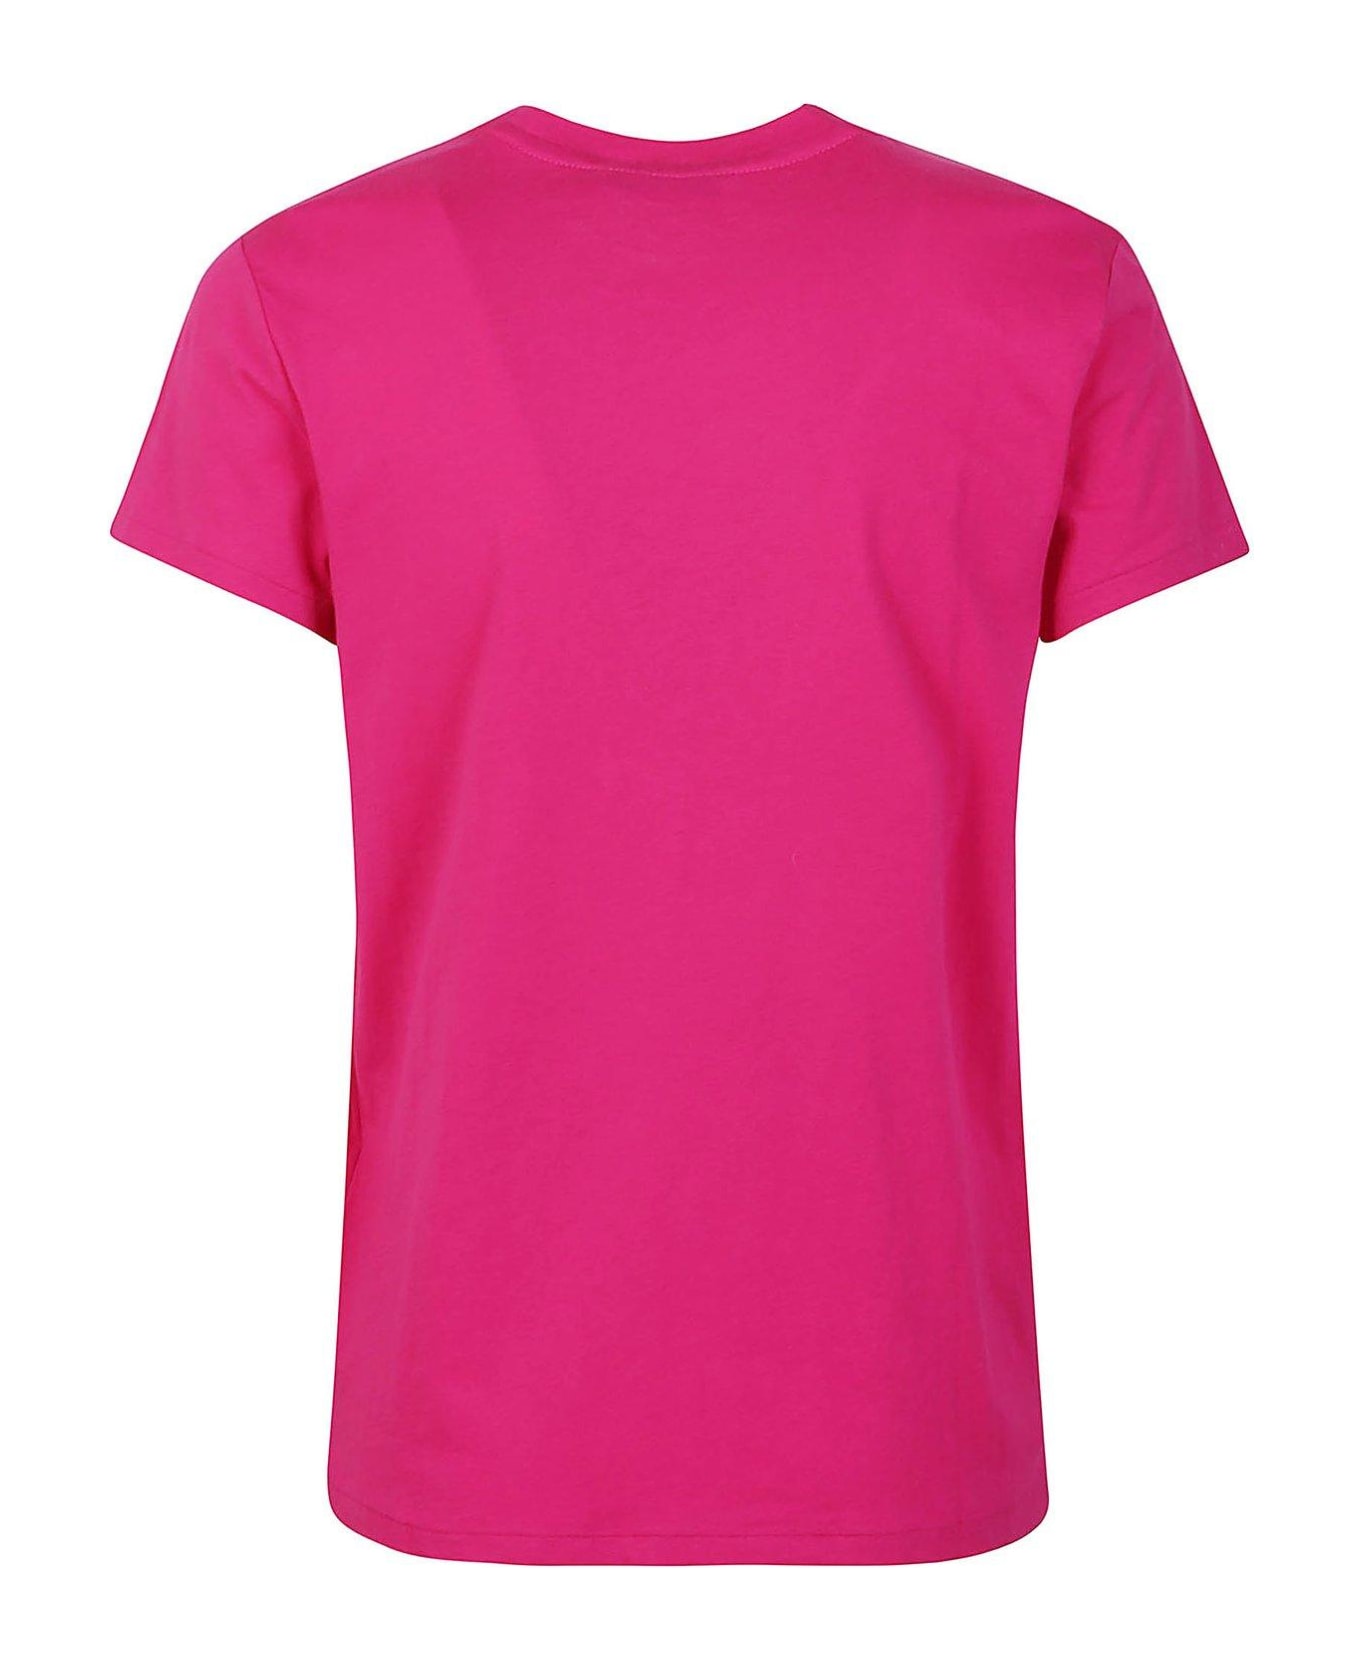 Ralph Lauren Pony Embroidered Crewneck T-shirt - Pink Sky